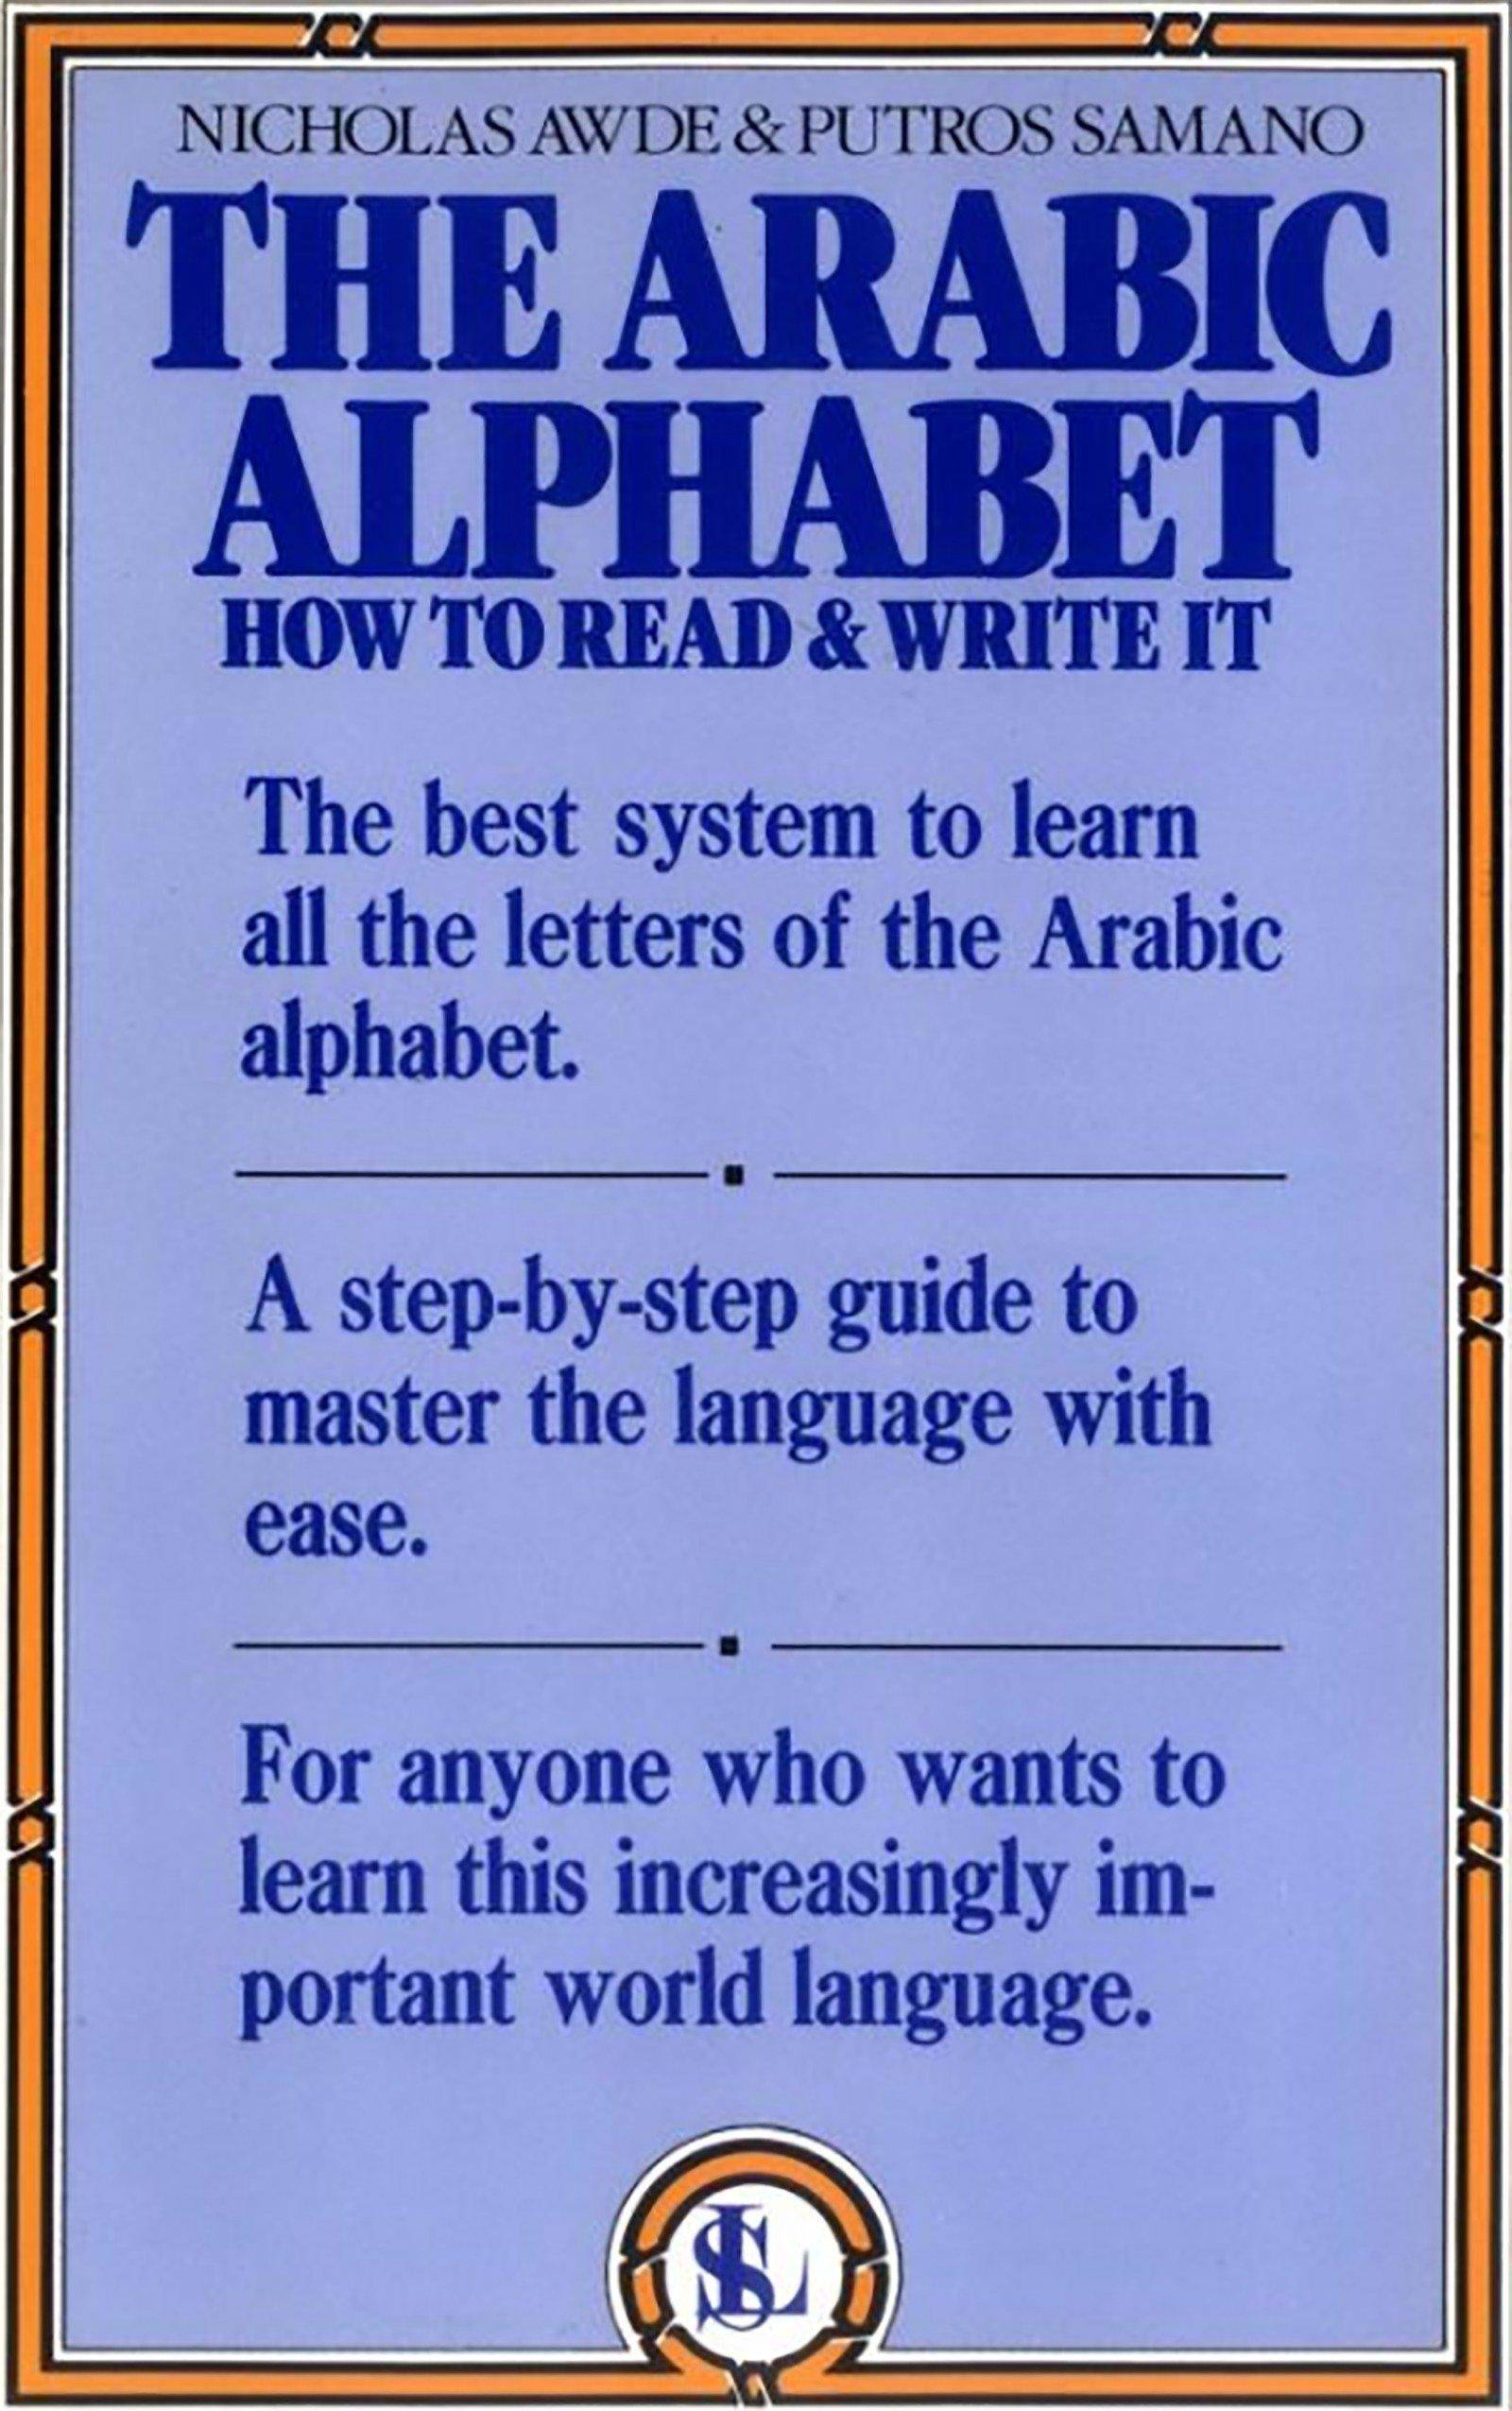 Arabic Alphabet: How to Read and Write It - SureShot Books Publishing LLC